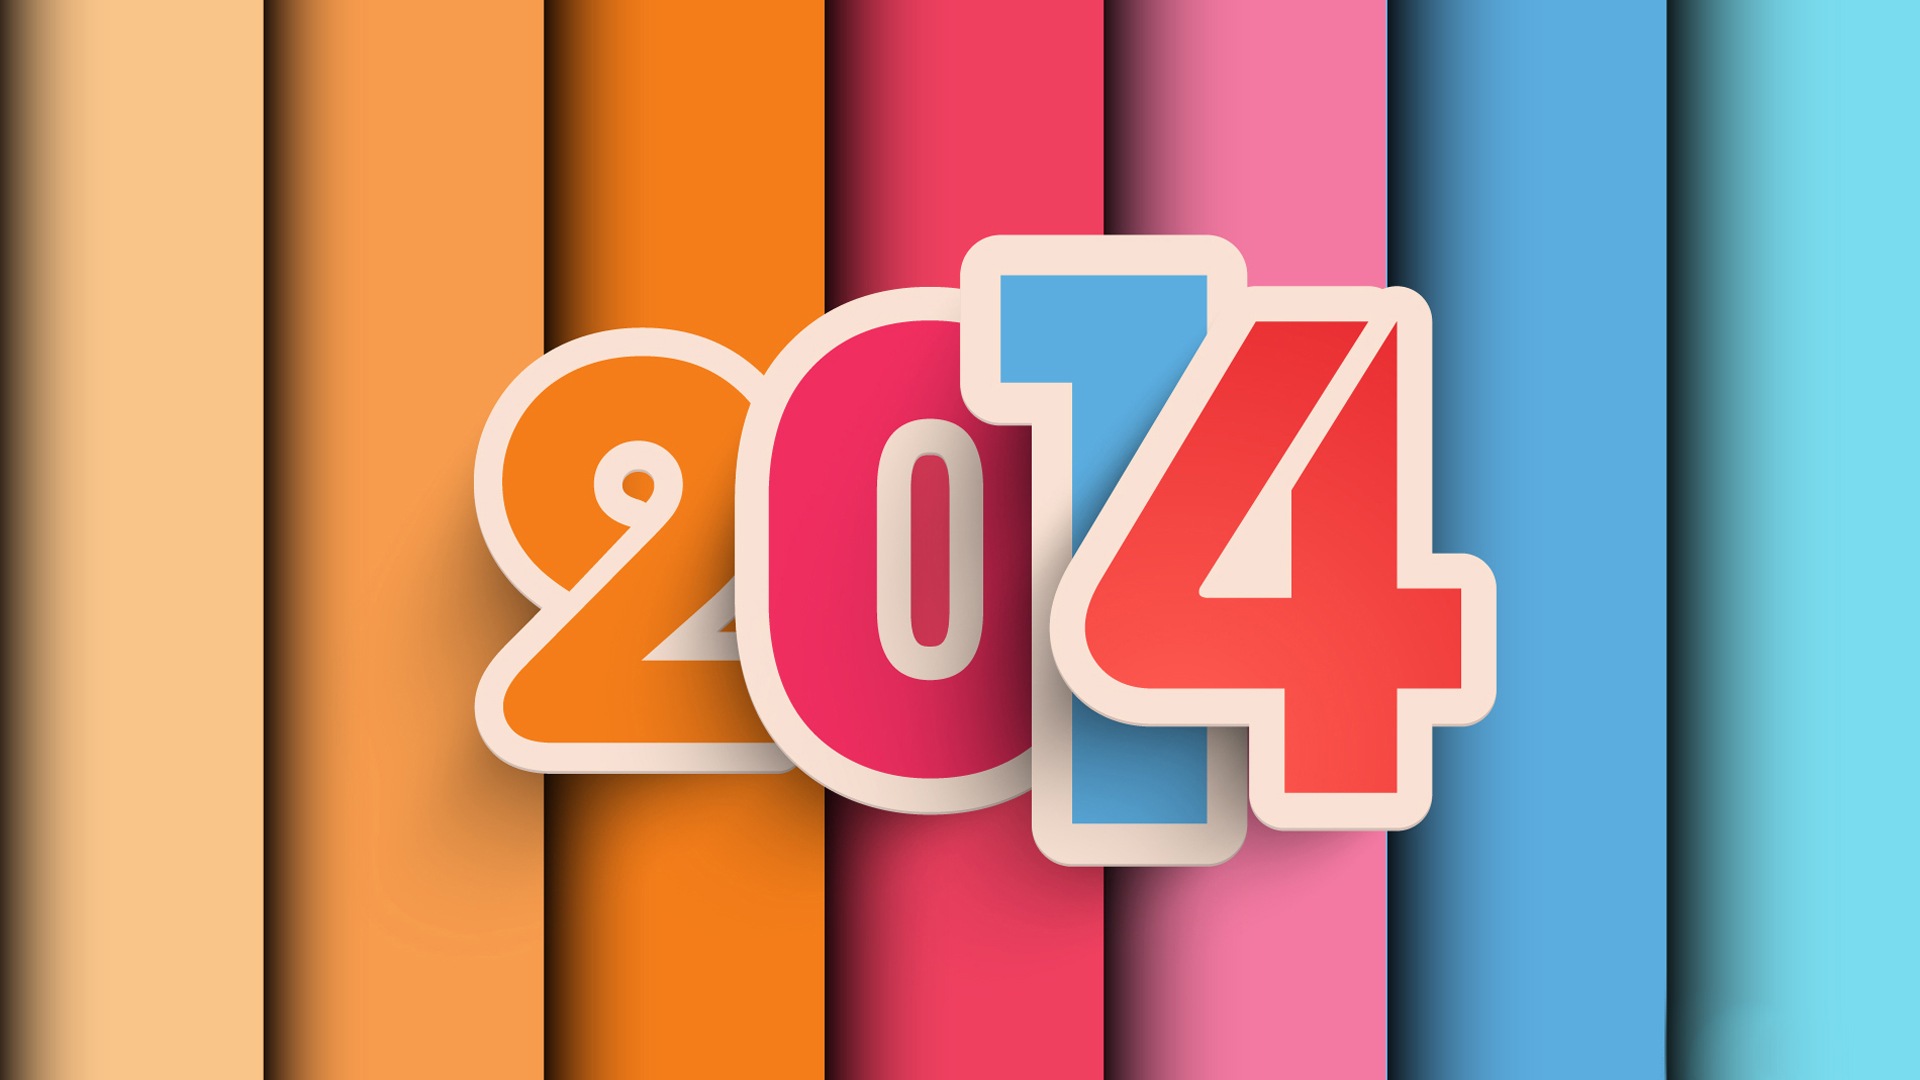 2014 Neues Jahr Theme HD Wallpapers (1) #9 - 1920x1080